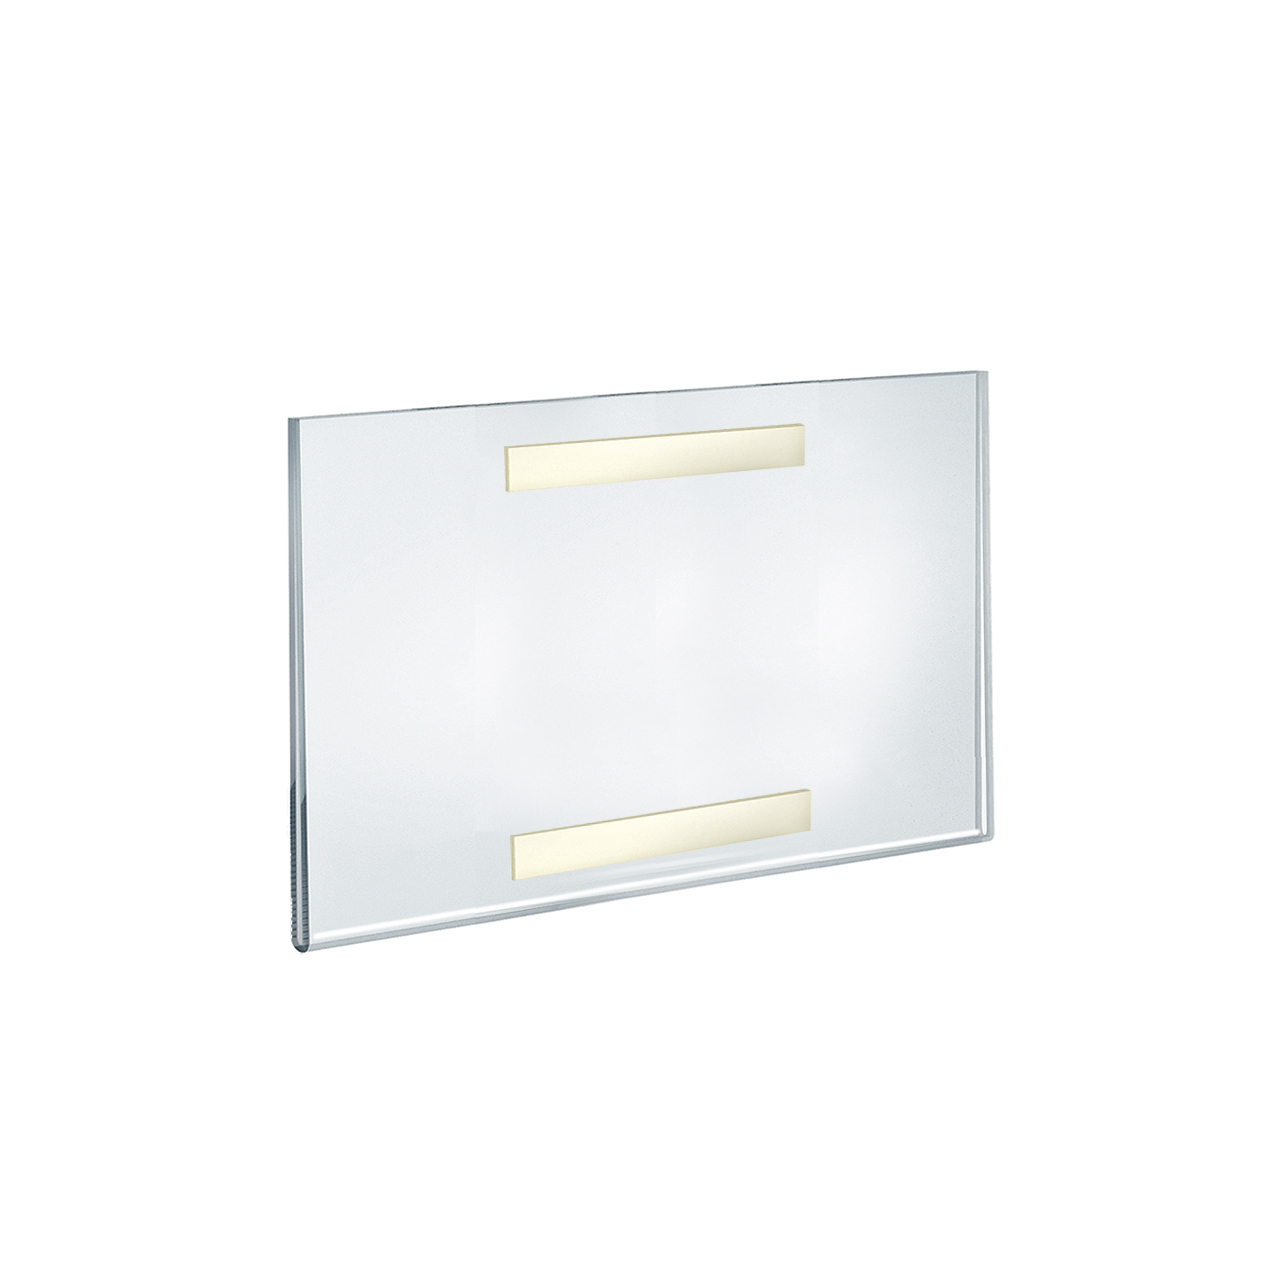 Azar Displays 122017 Self Adhesive Tape Clear Acrylic Wall Sign Holder Frame  11